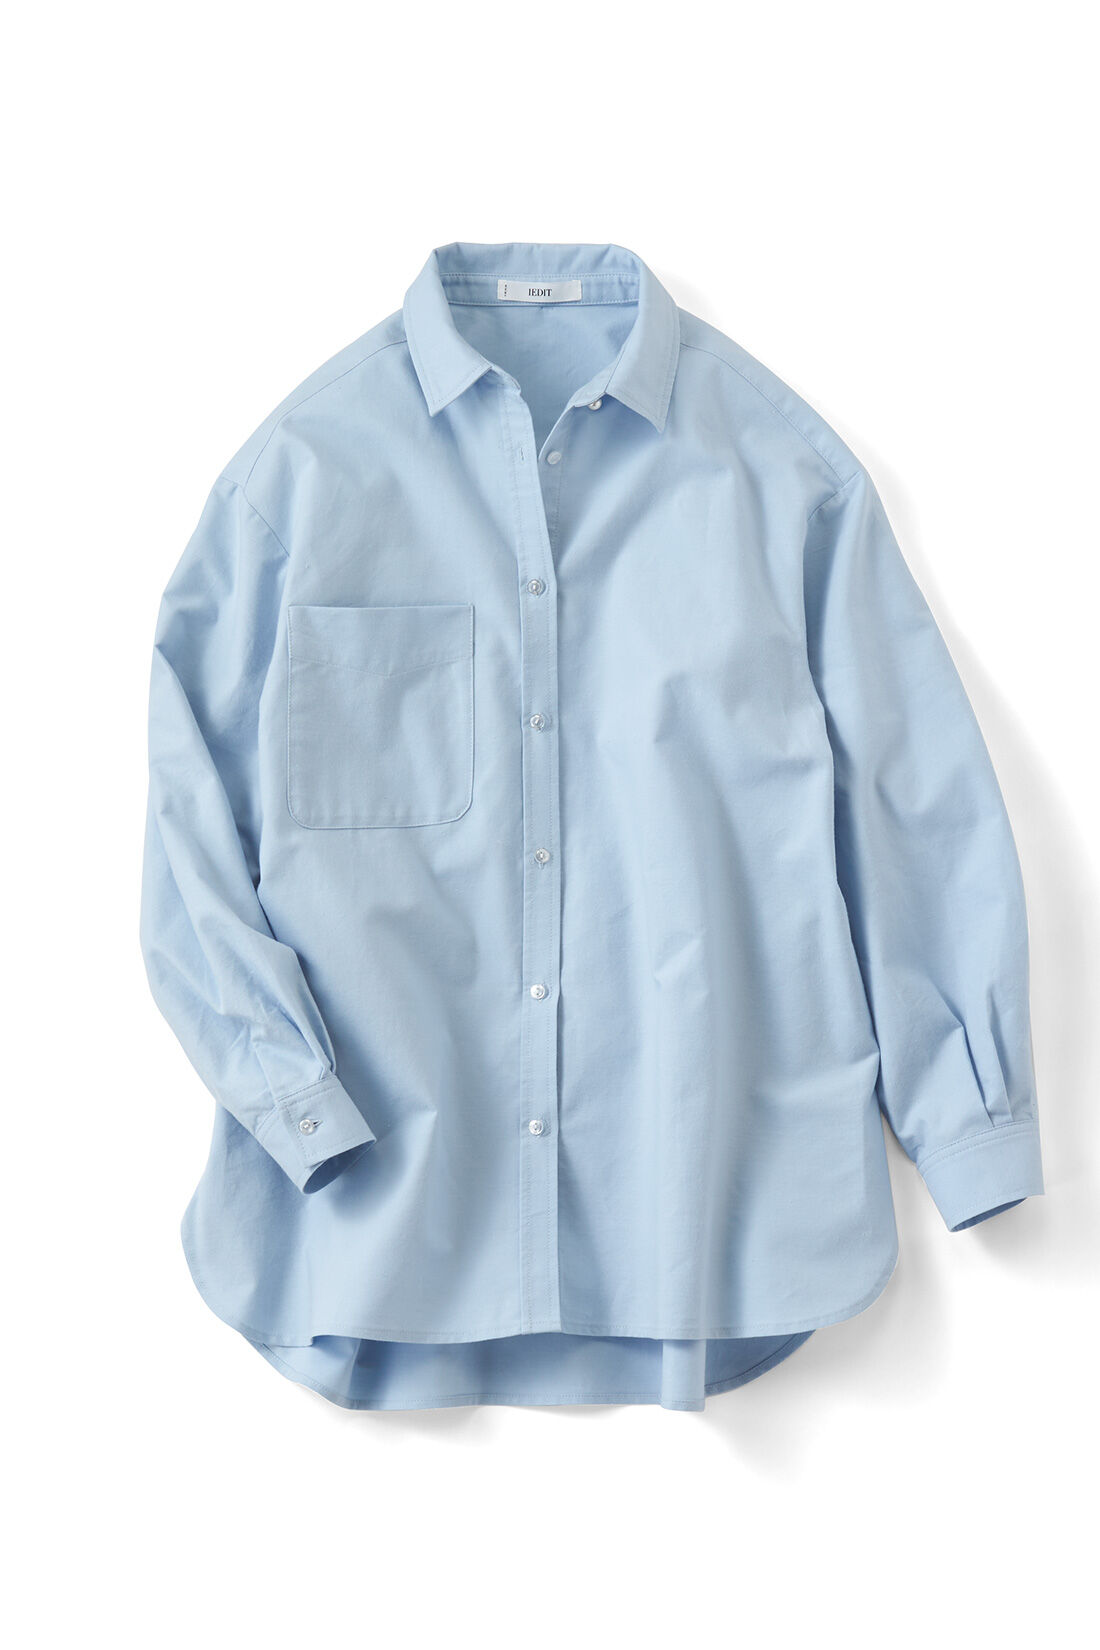 IEDIT[イディット]　バックフレアーデザインがきいた オックスフォード素材のこなれ見えシャツ〈イエロー〉|ブルー